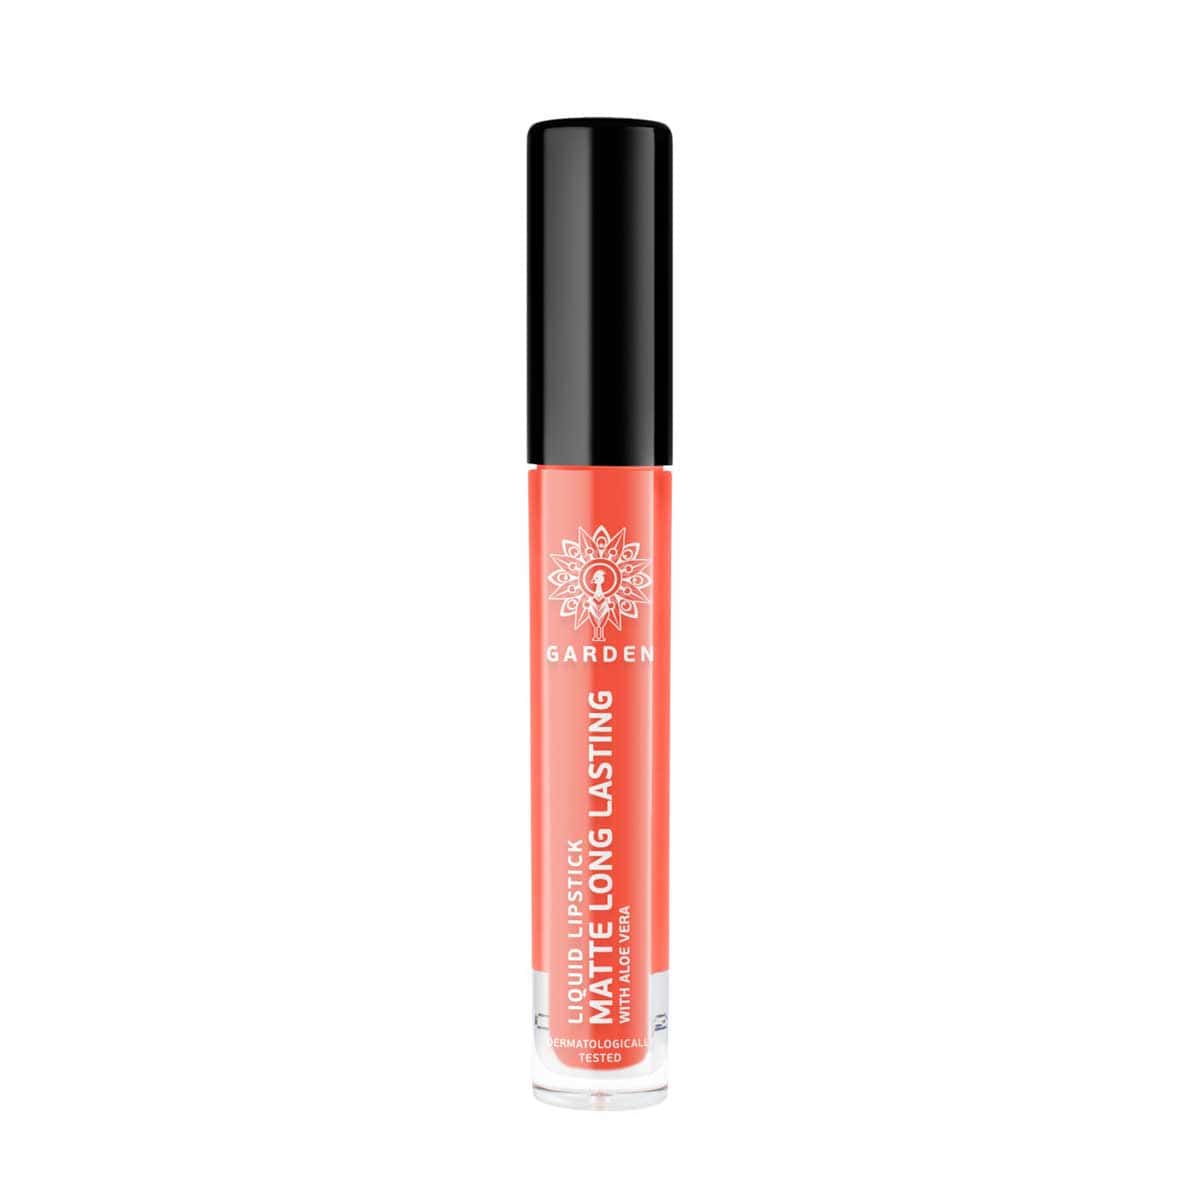 Garden-Liquid-Lipstick-Matte-Long-Lasting-Coral-Peach-03-4ml-5205962000104